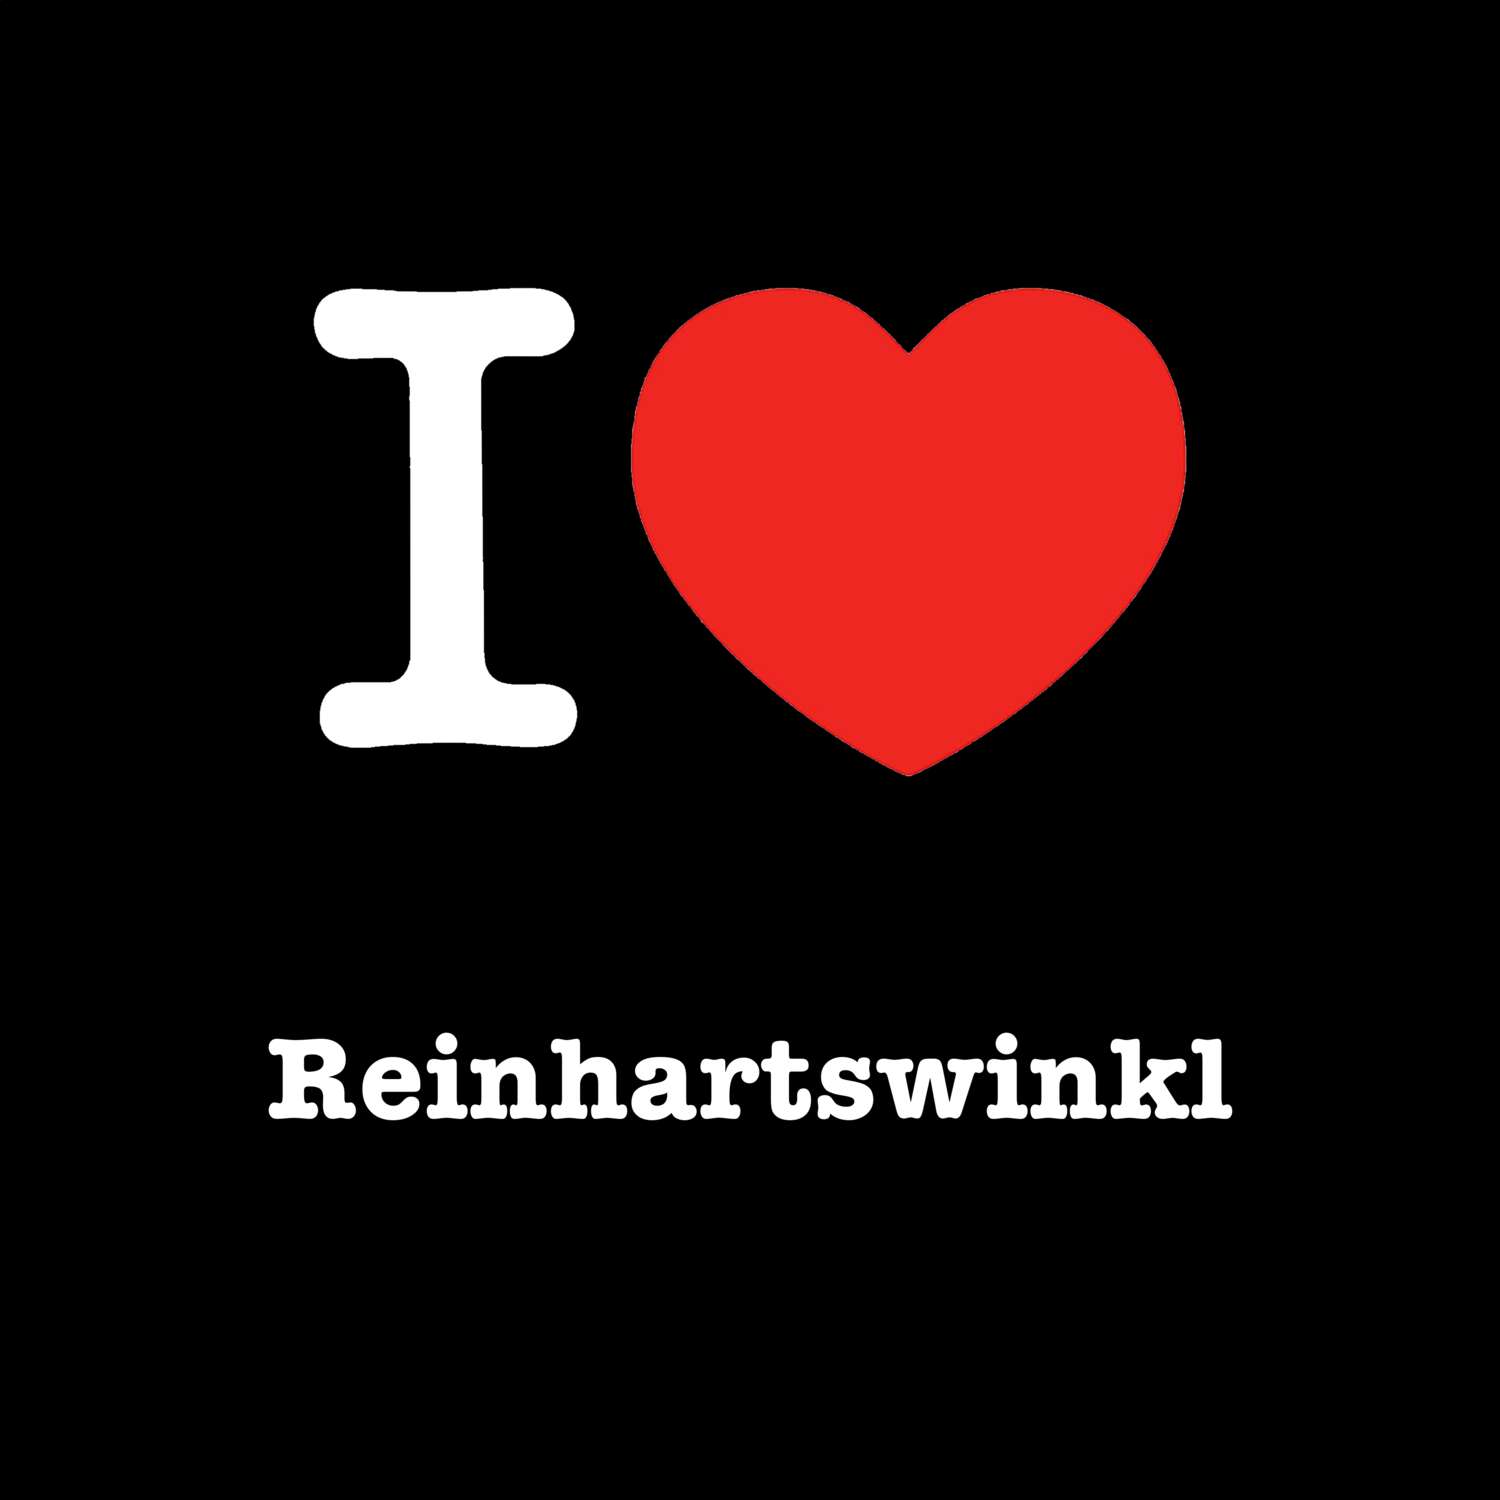 Reinhartswinkl T-Shirt »I love«